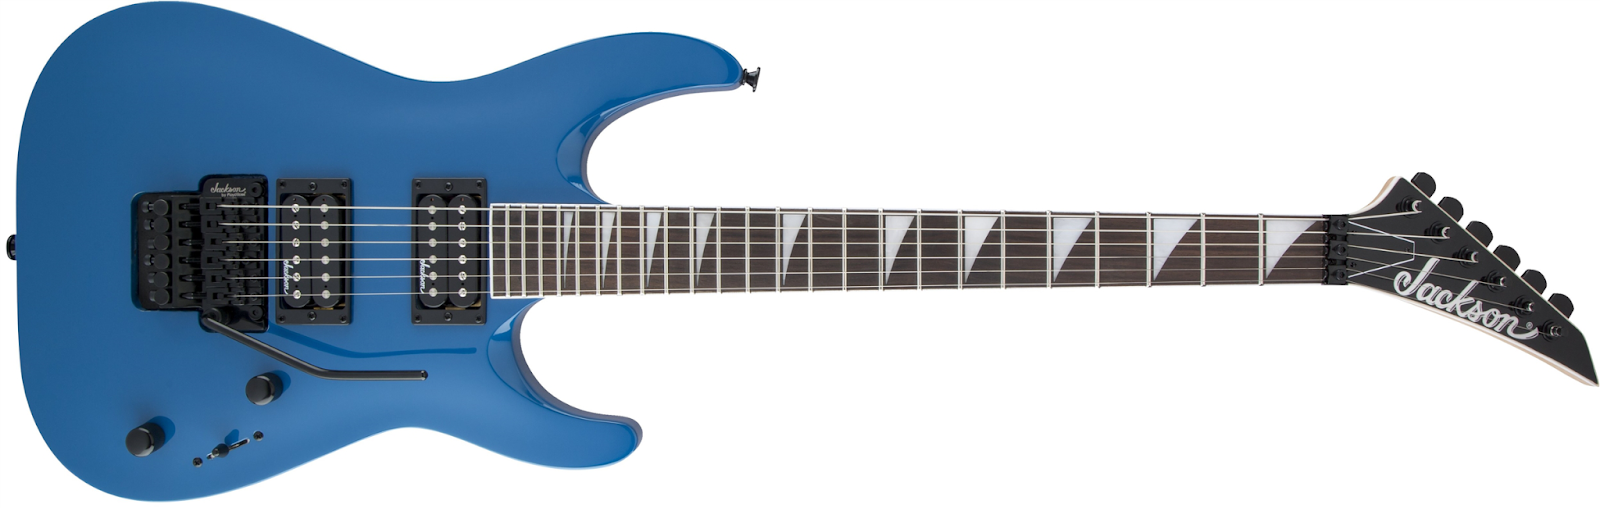 Jackson JS32 Dinky electric guitar under $300/£300.